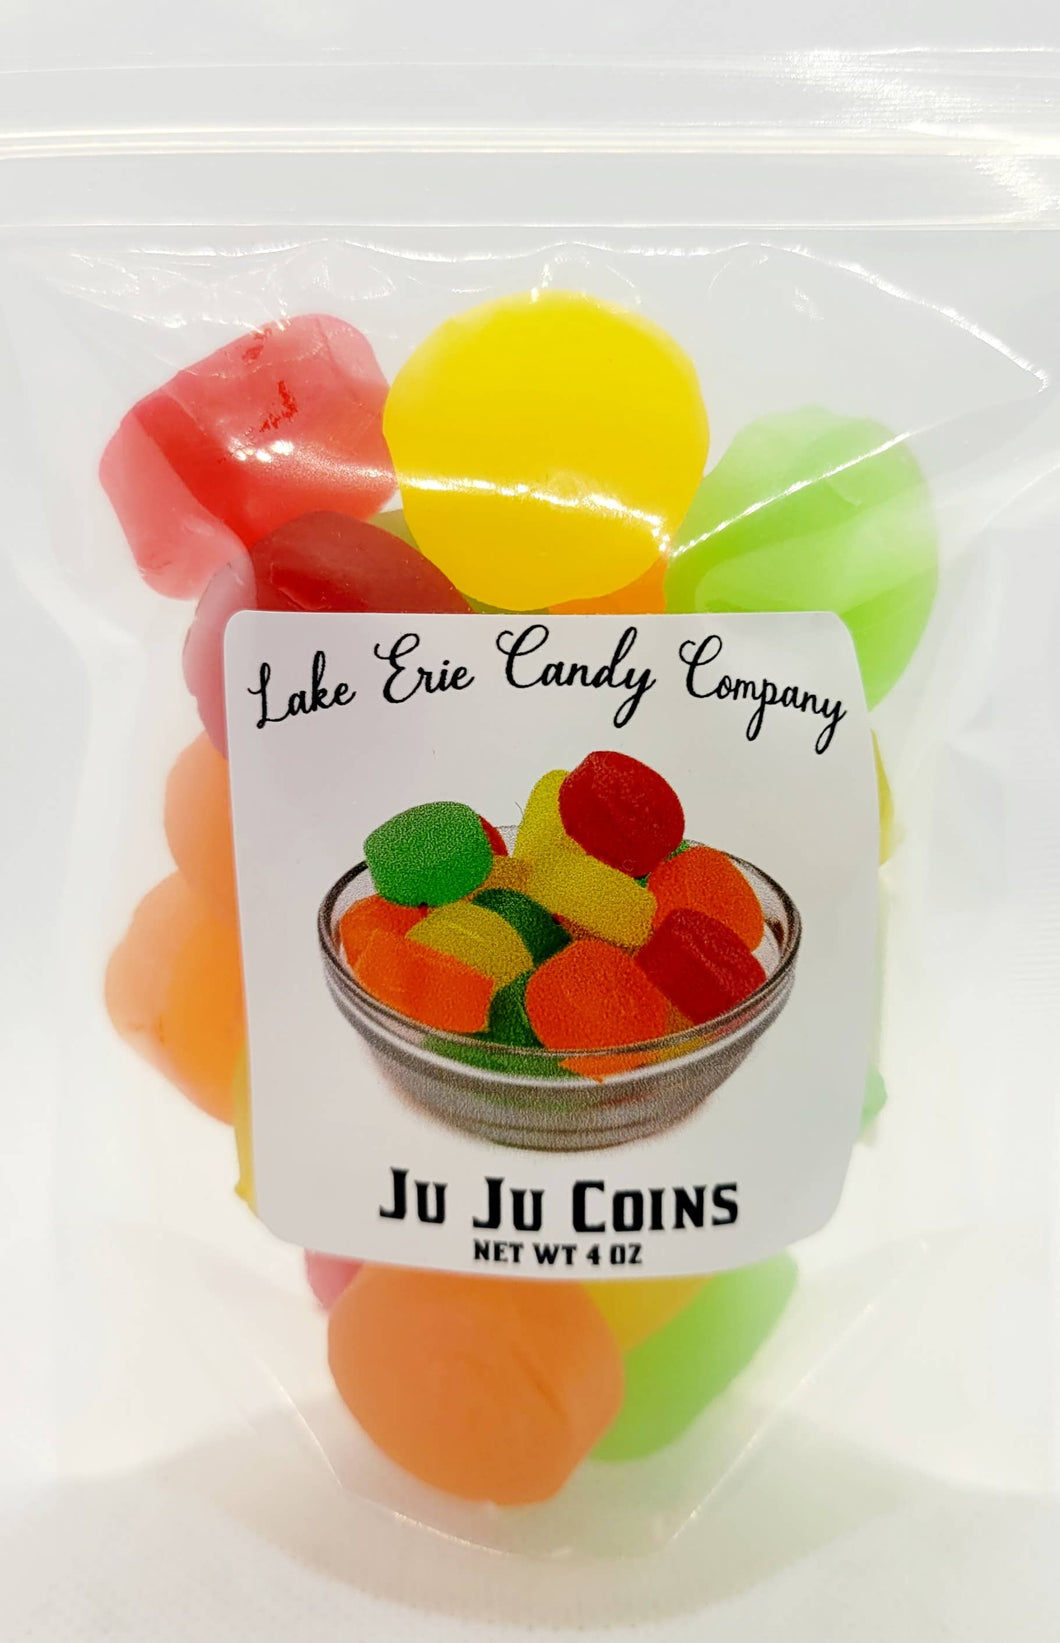 Lake Erie Candy Company - Juju Coins